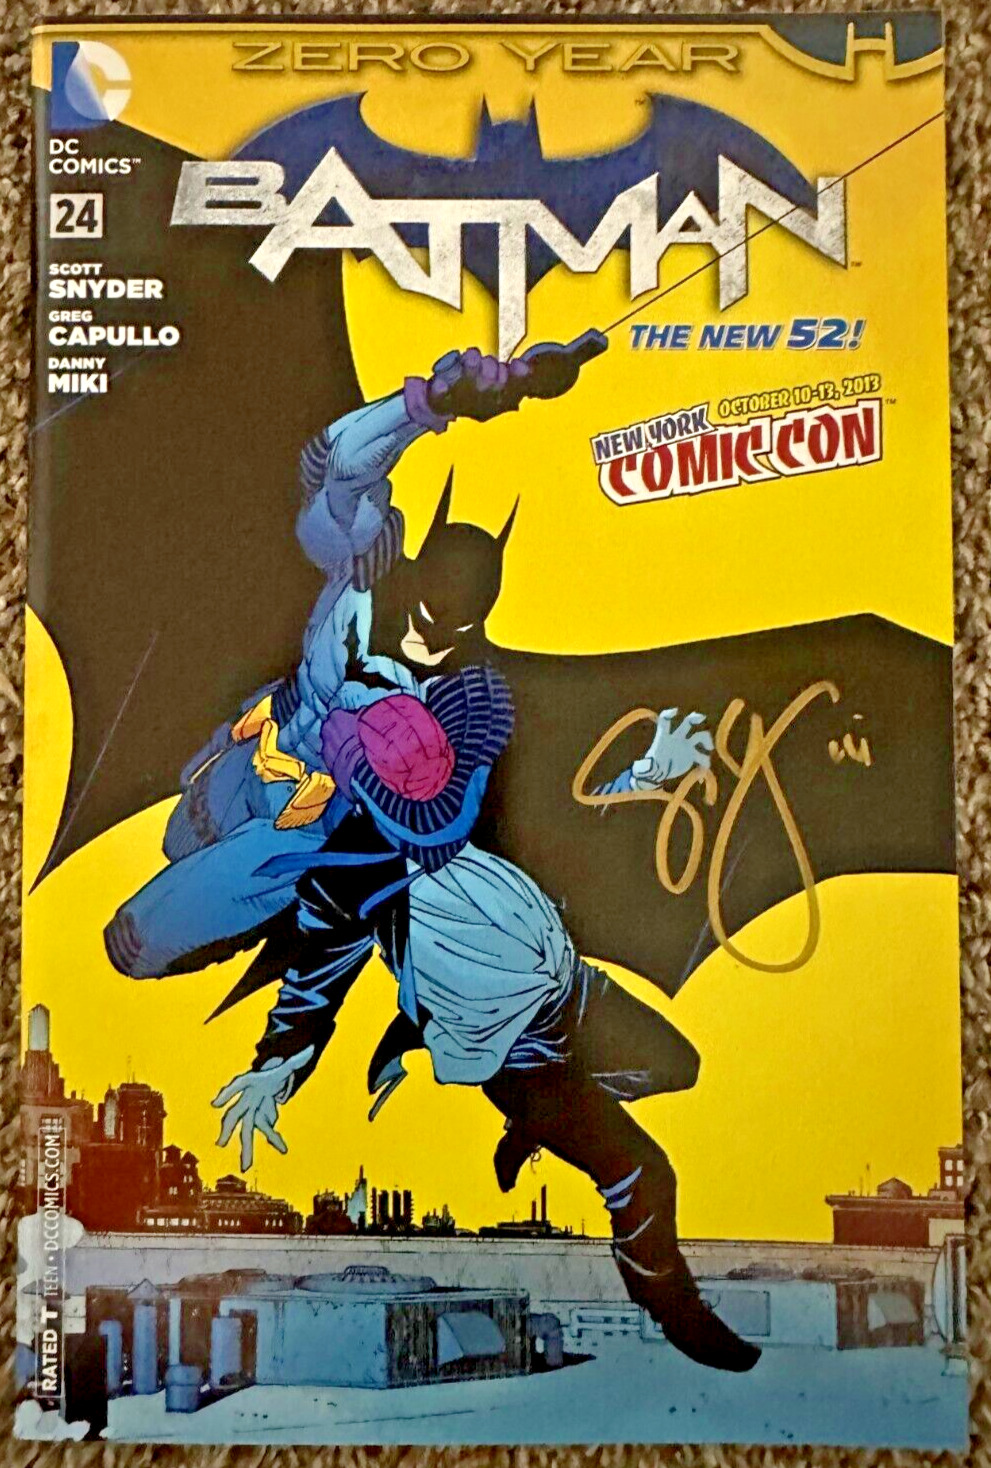 BATMAN #24 (Vol. 2, 2013) by Scott Snyder, NYCC Variant, Signed By Snyder